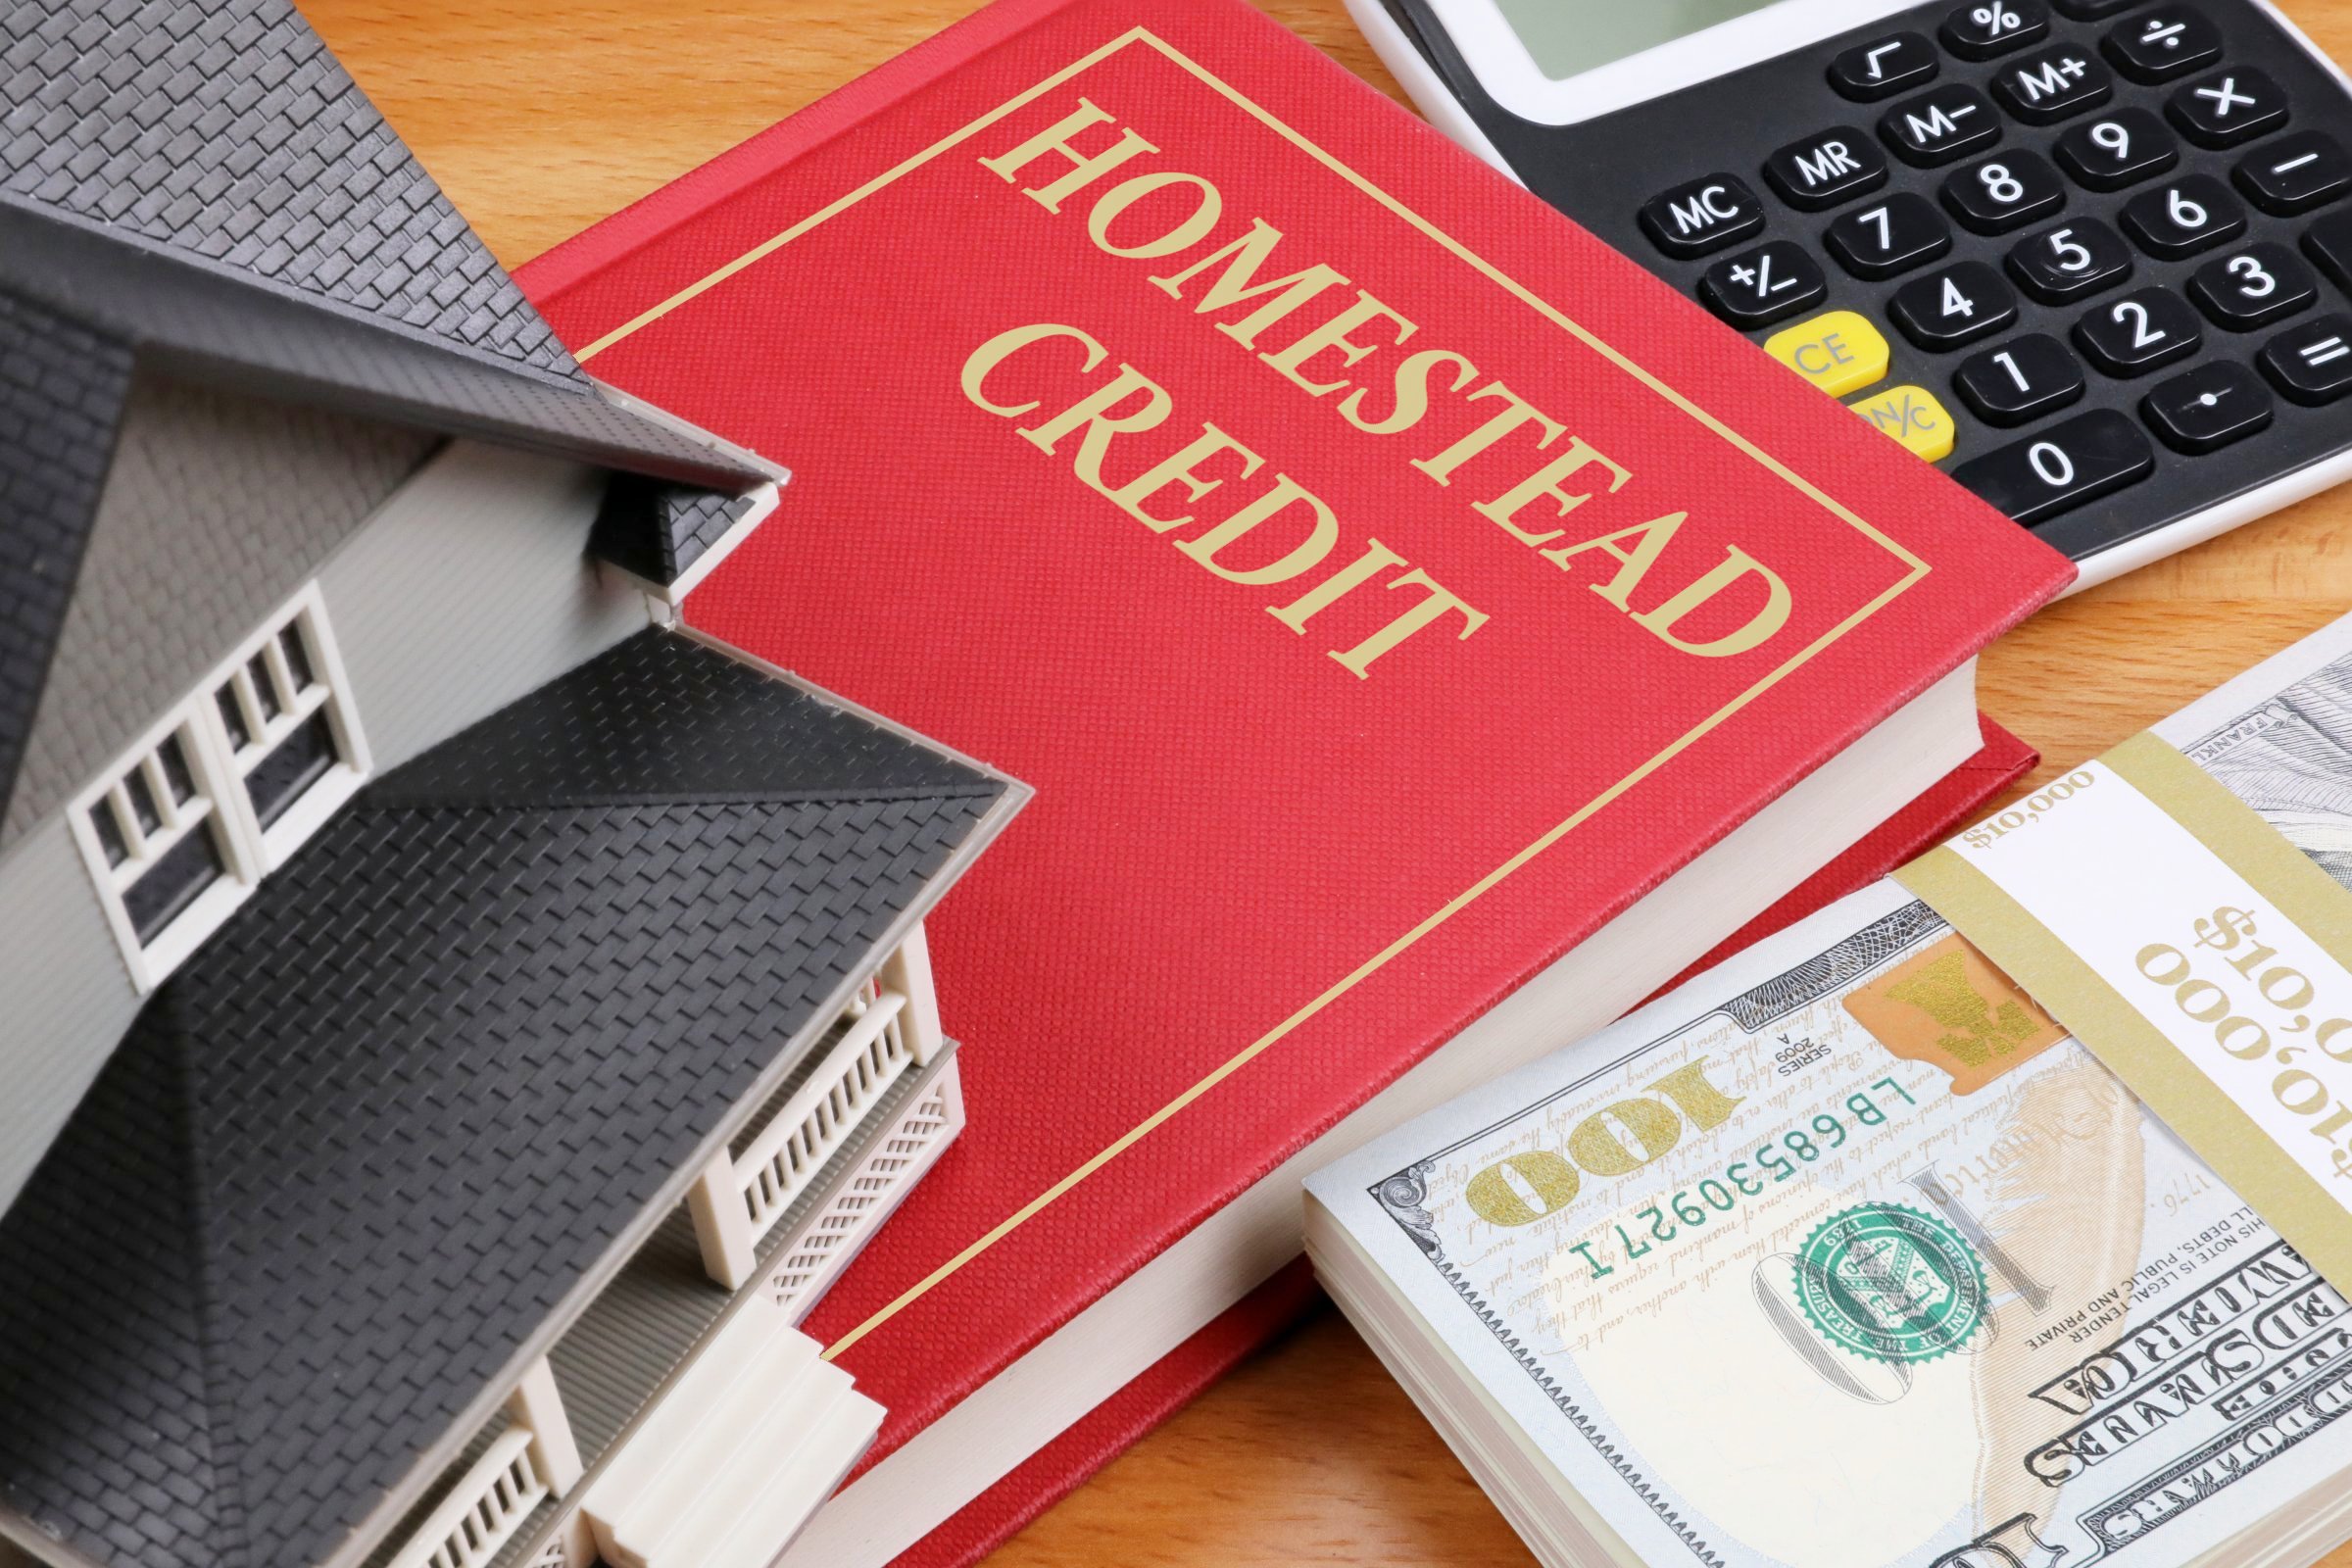 homestead credit